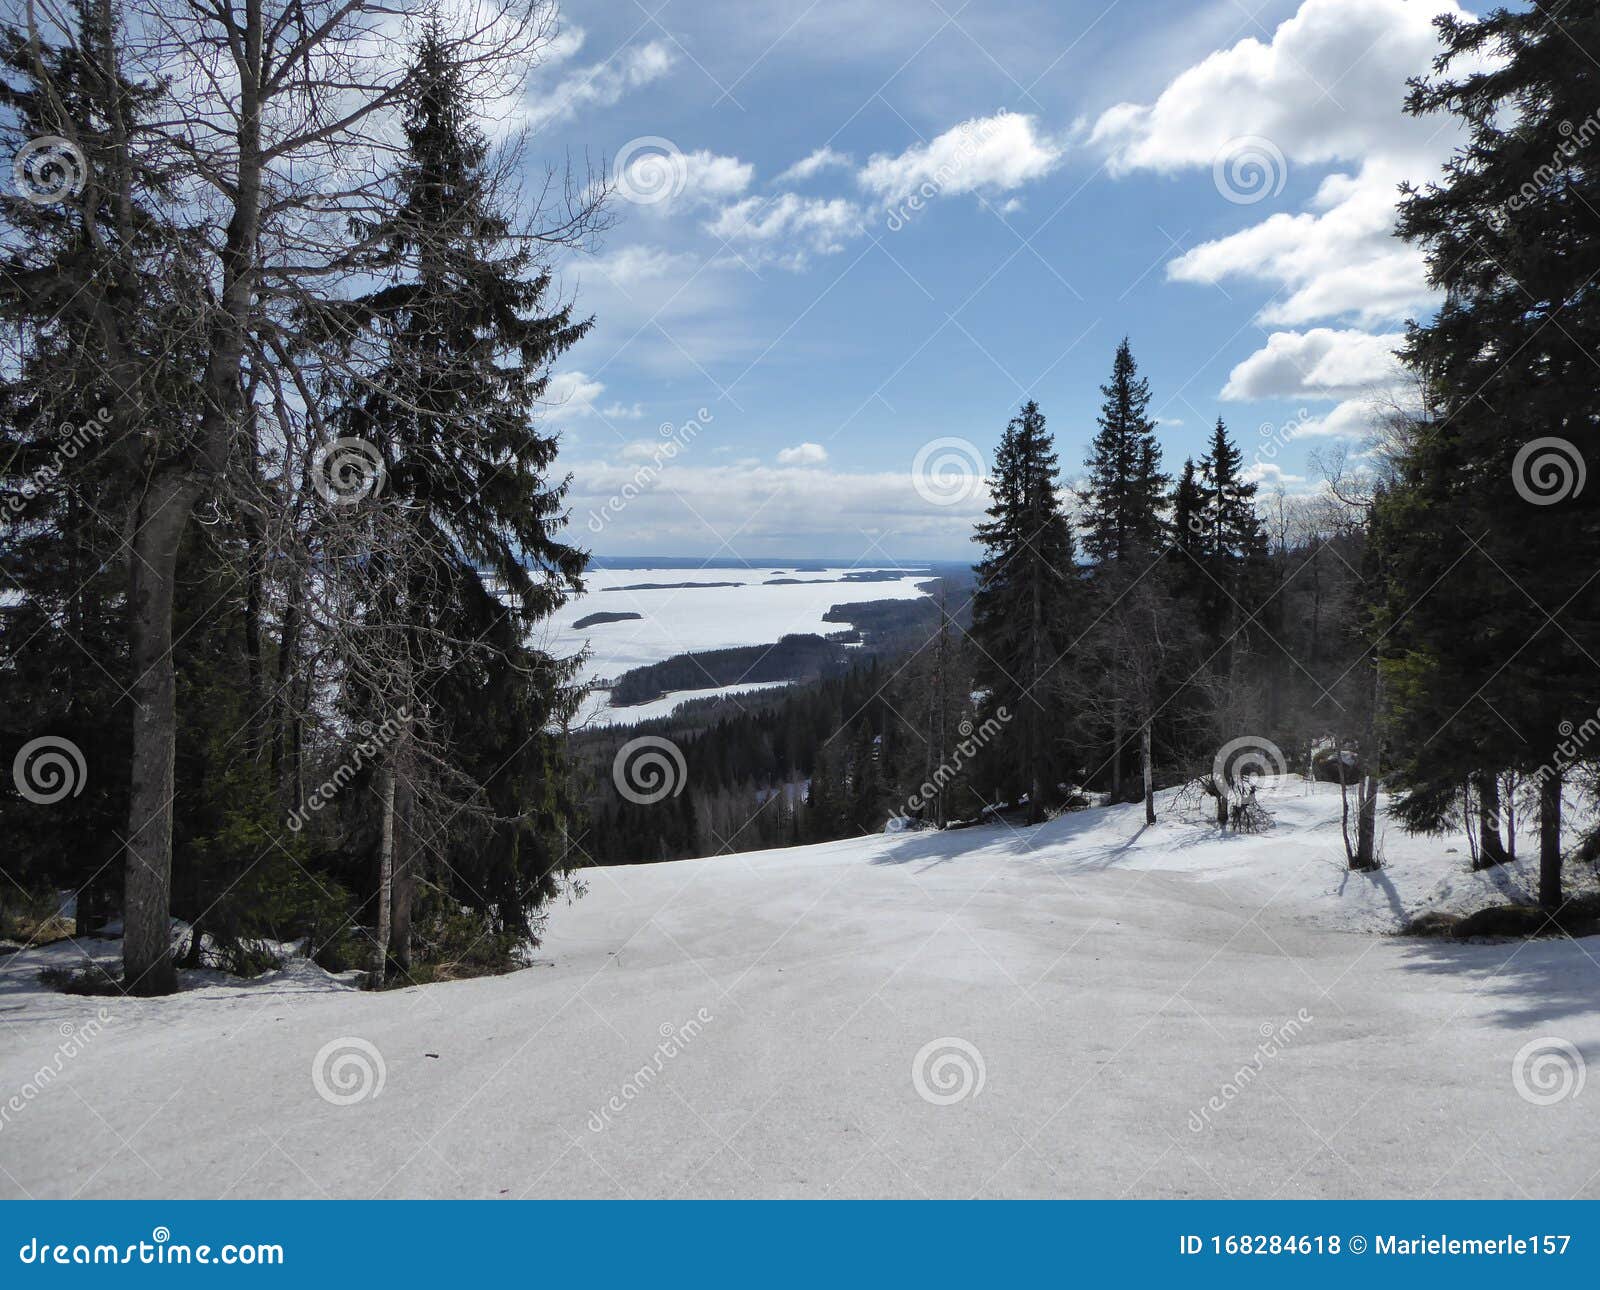 view of a frozen lake in koli national park in finland.